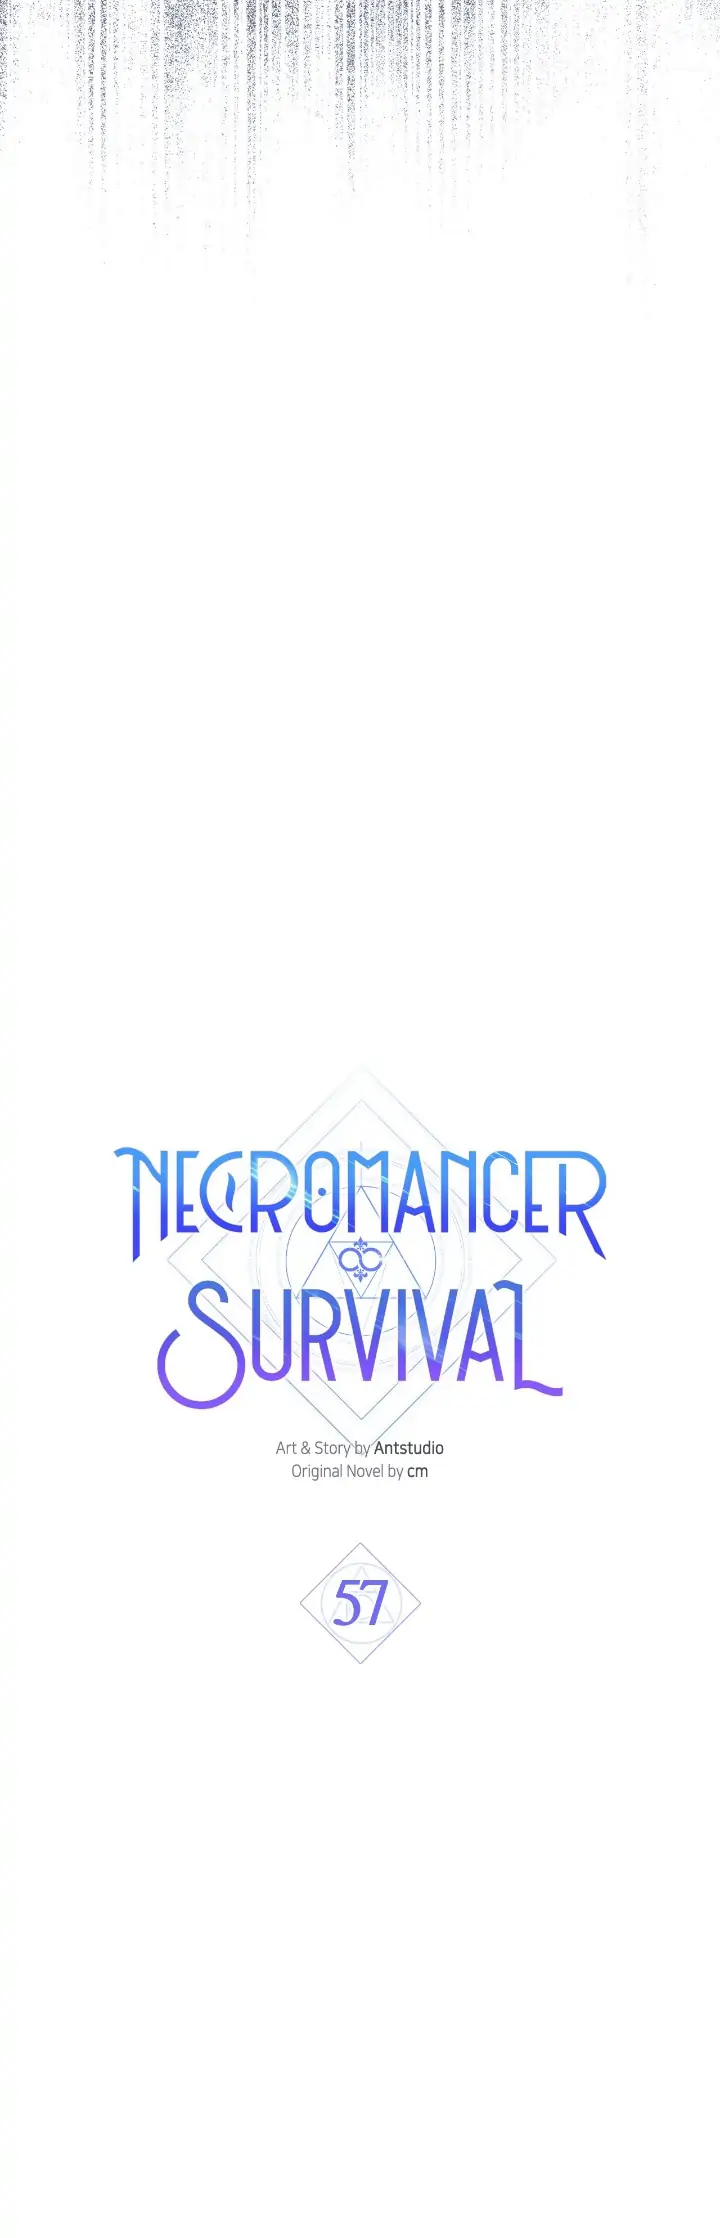 Necromancer Survival chapter 57